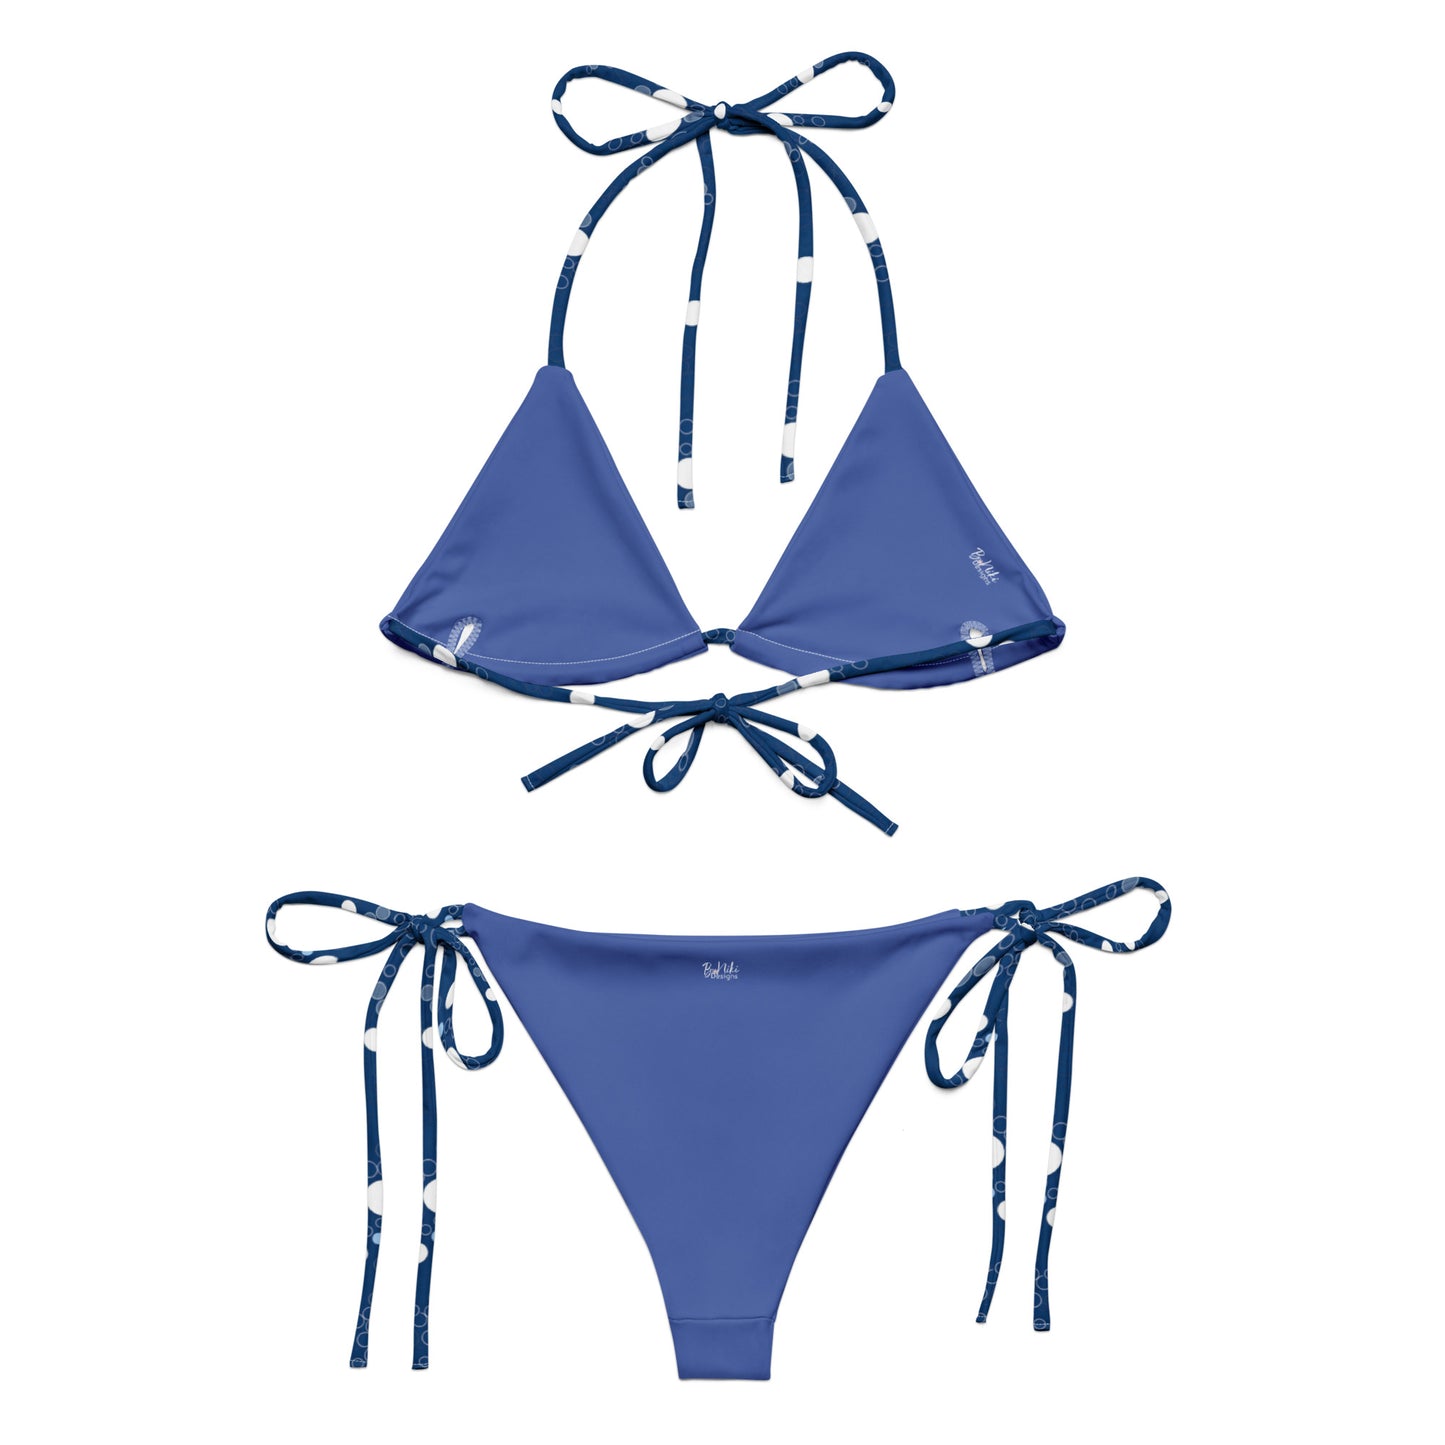 Blue and White Polka Dot String Bikini